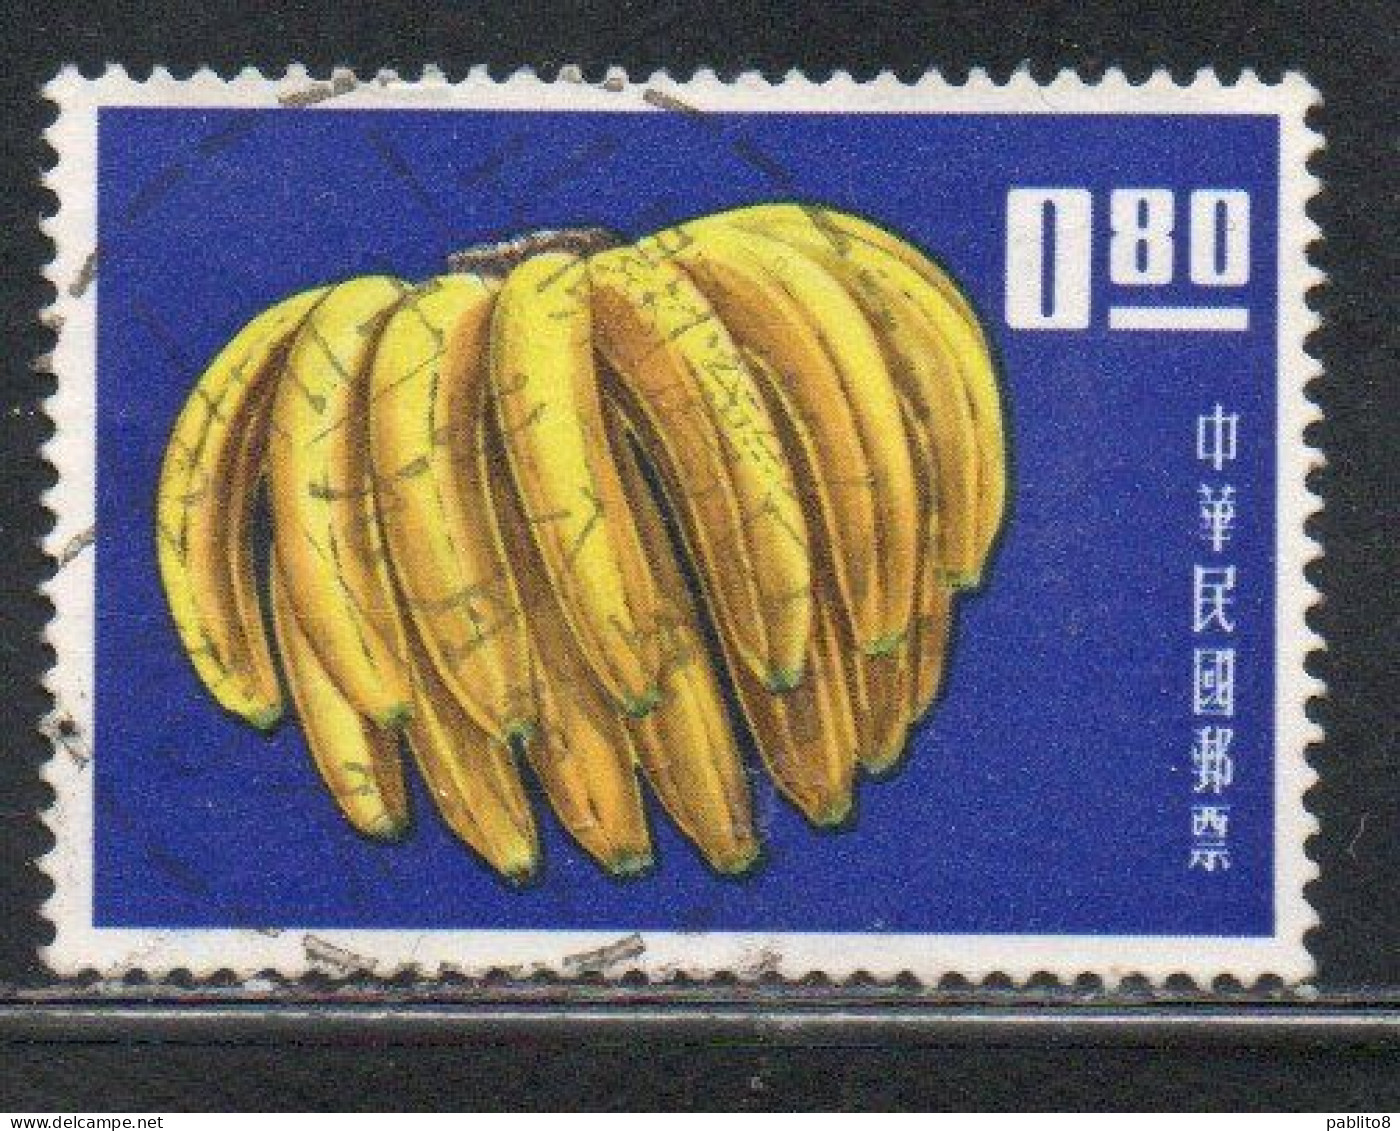 CHINA REPUBLIC CINA TAIWAN FORMOSA 1964 FRUITS BANANAS BANANA FRUIT 80c USED USATO OBLITERE' - Gebraucht